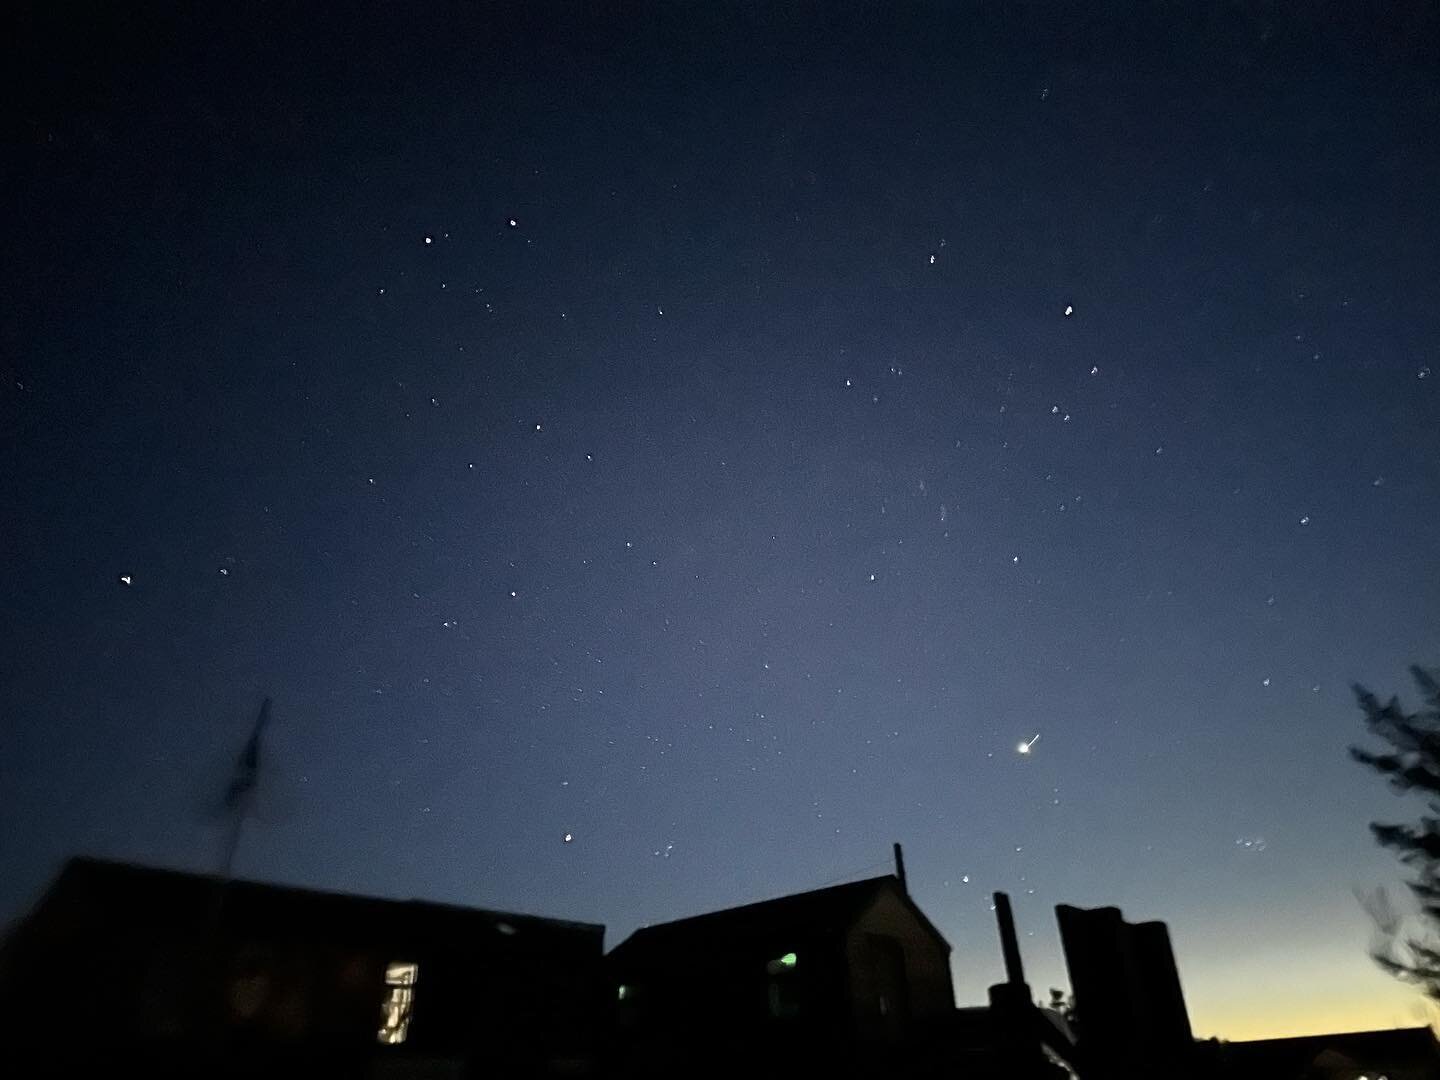 Wow! 🥰. Beautifully crystal clear night last night #stars #stargazing #bigsky #astronomy #darkskyshots #darkskycommunity #isleofcoll #tnmcoll @visitscotland @idadarksky @explore_coll @wildaboutargyll @wildargyll @explore_argyll @argyllandbute @argyl